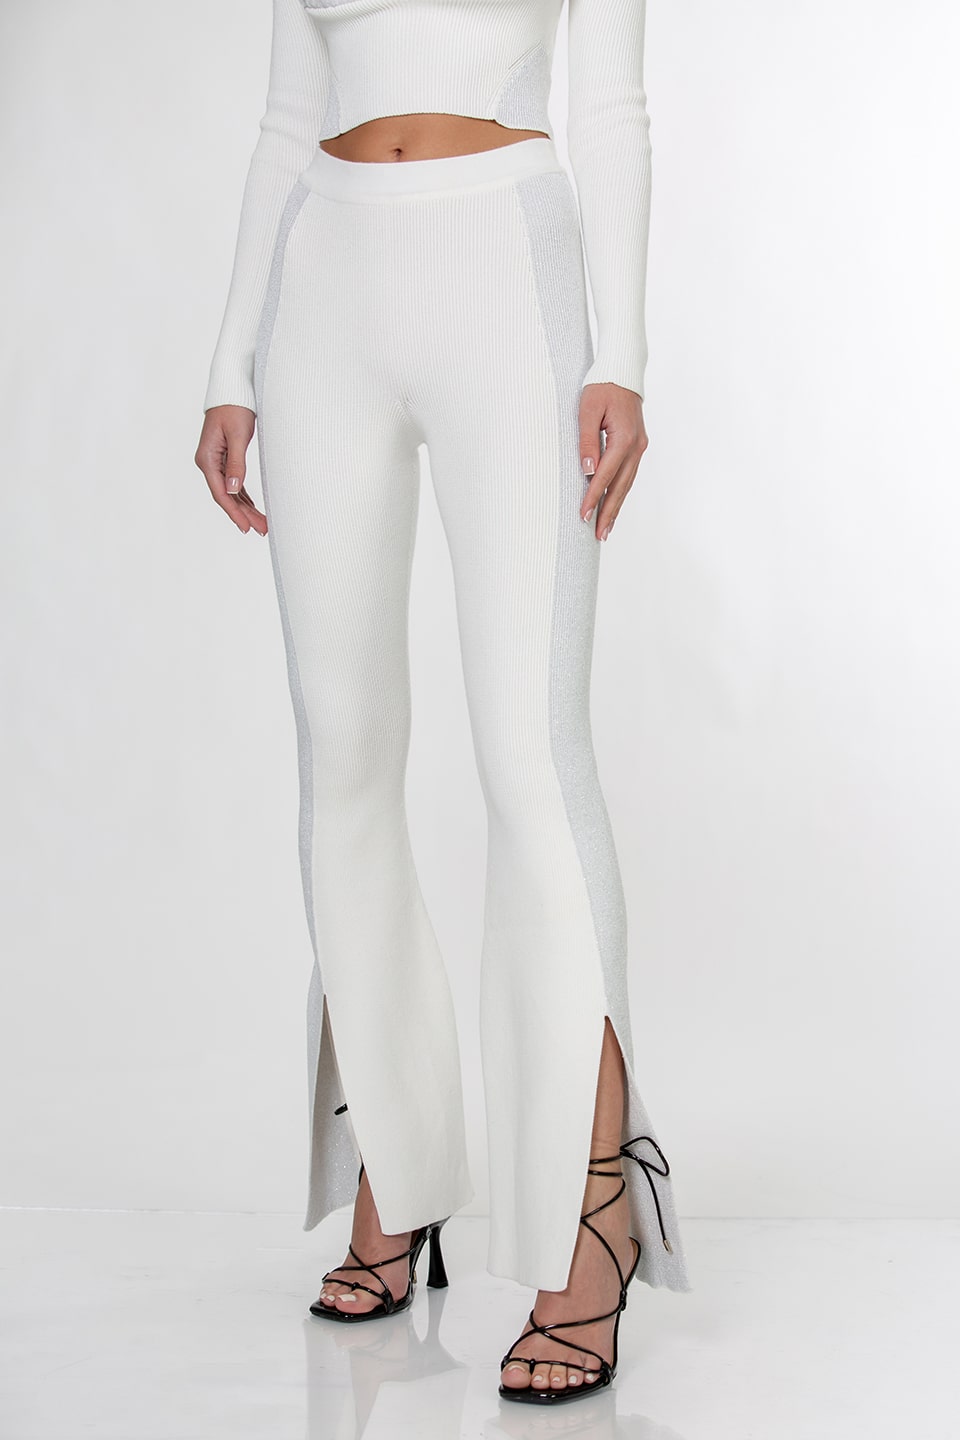 Thumbnail for Product gallery 1, kukhareva london seven pants white front slit